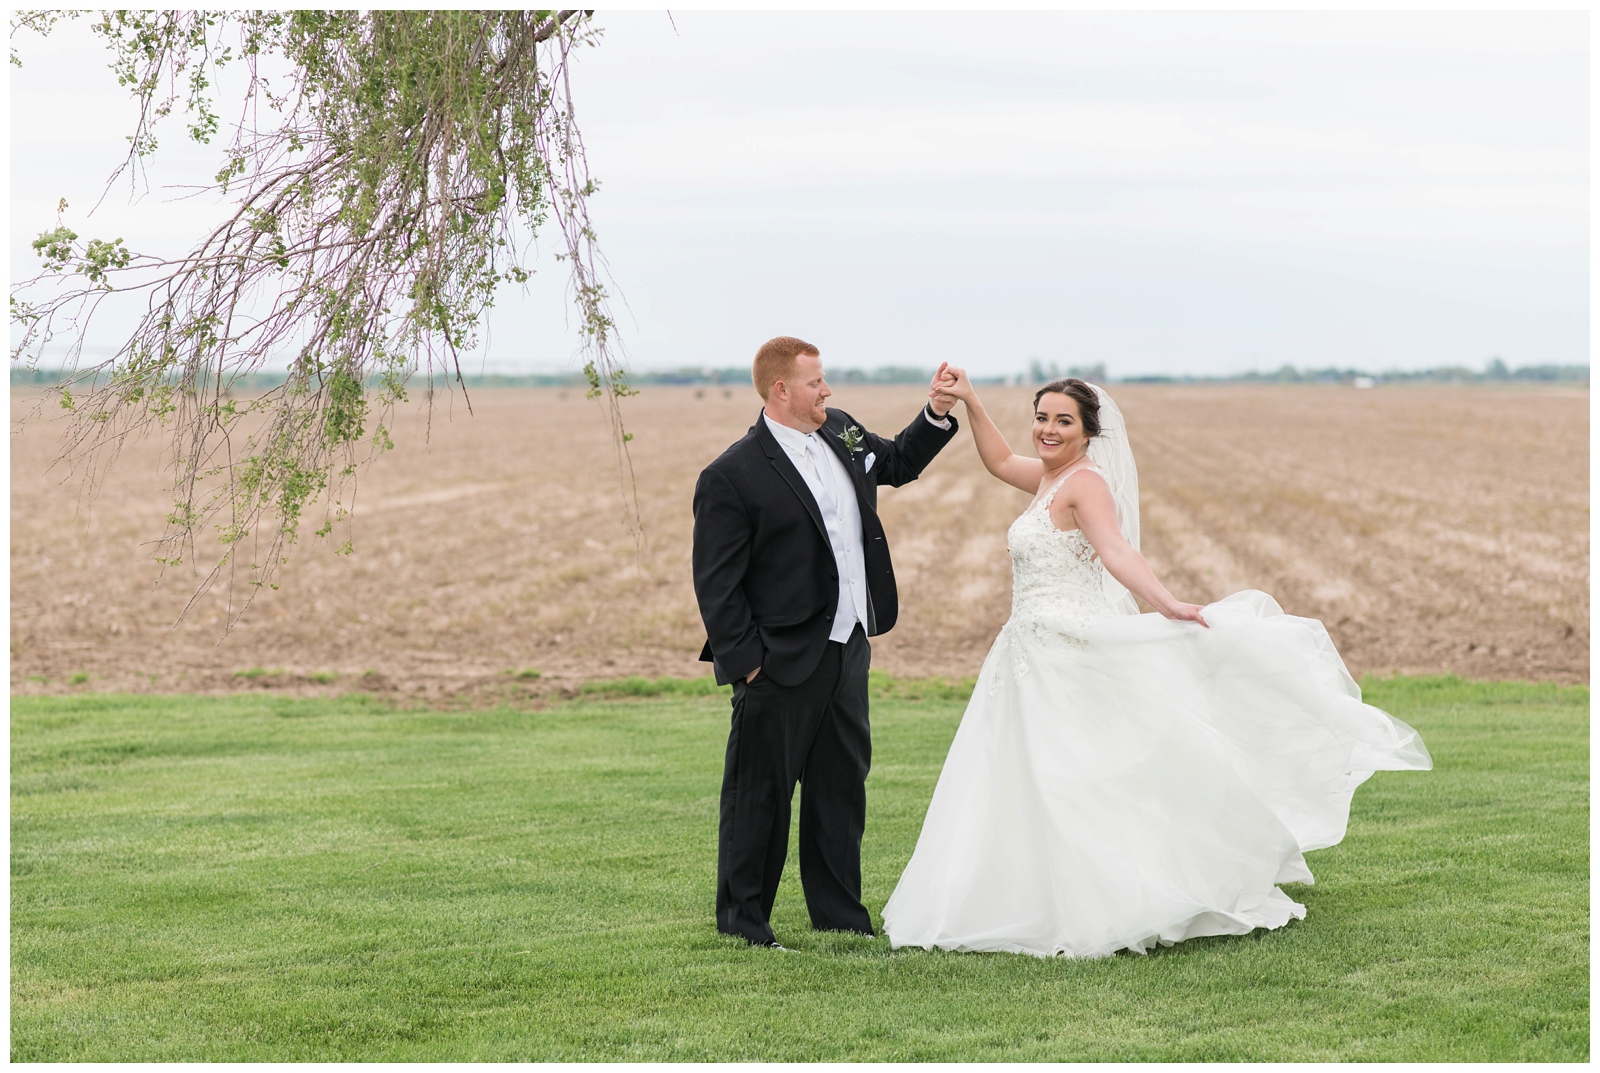 groom twirls bride during portraits on Ohio wedding day